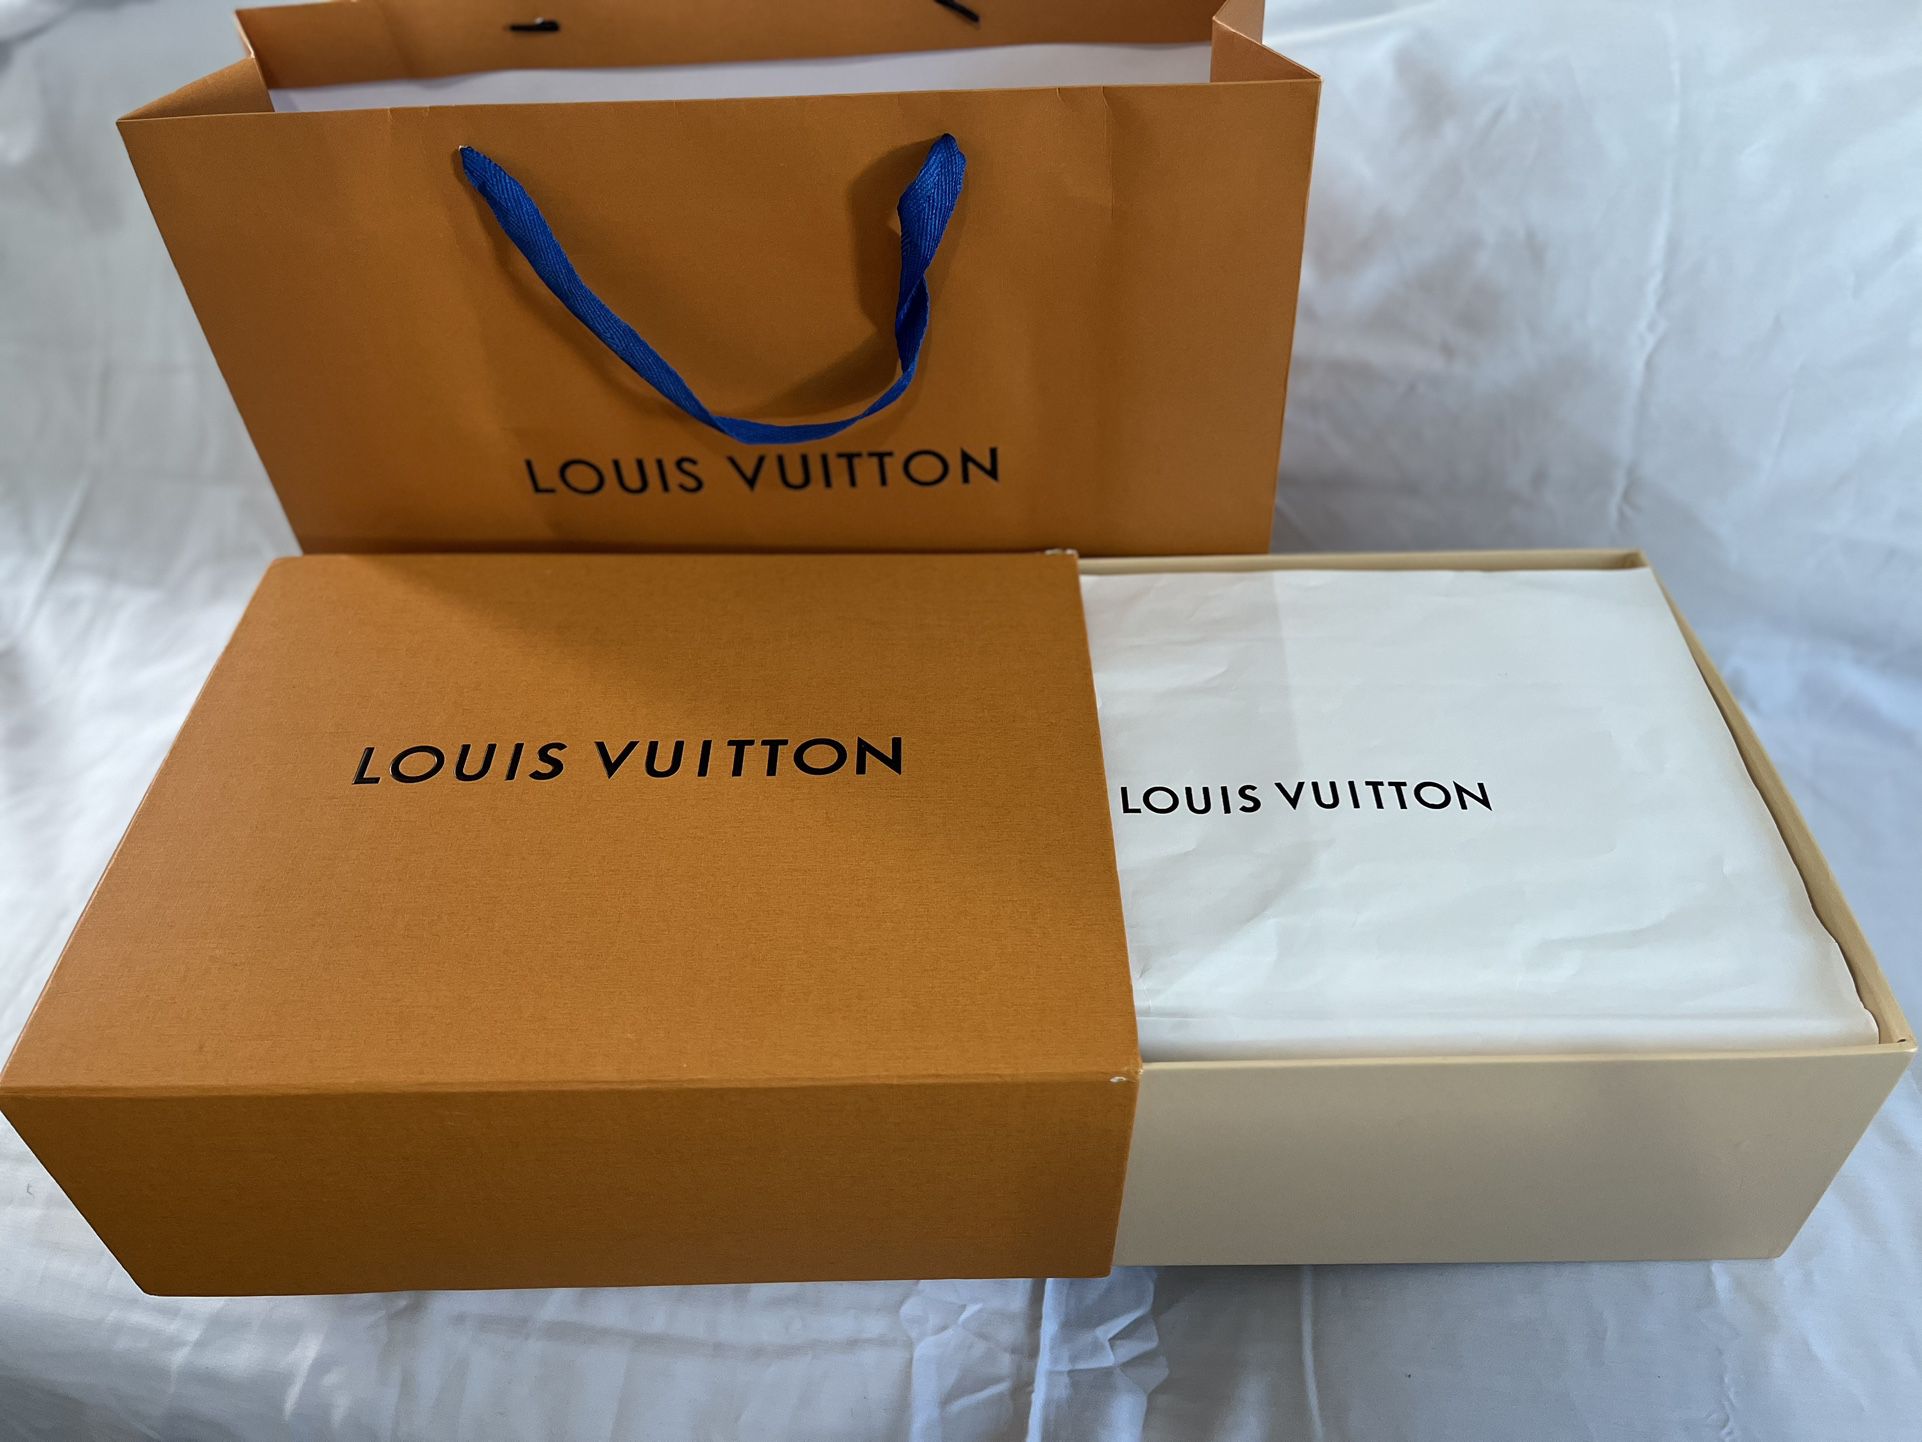 Louis Vuitton LV Trainer #54 Graphic Print White Black Blue